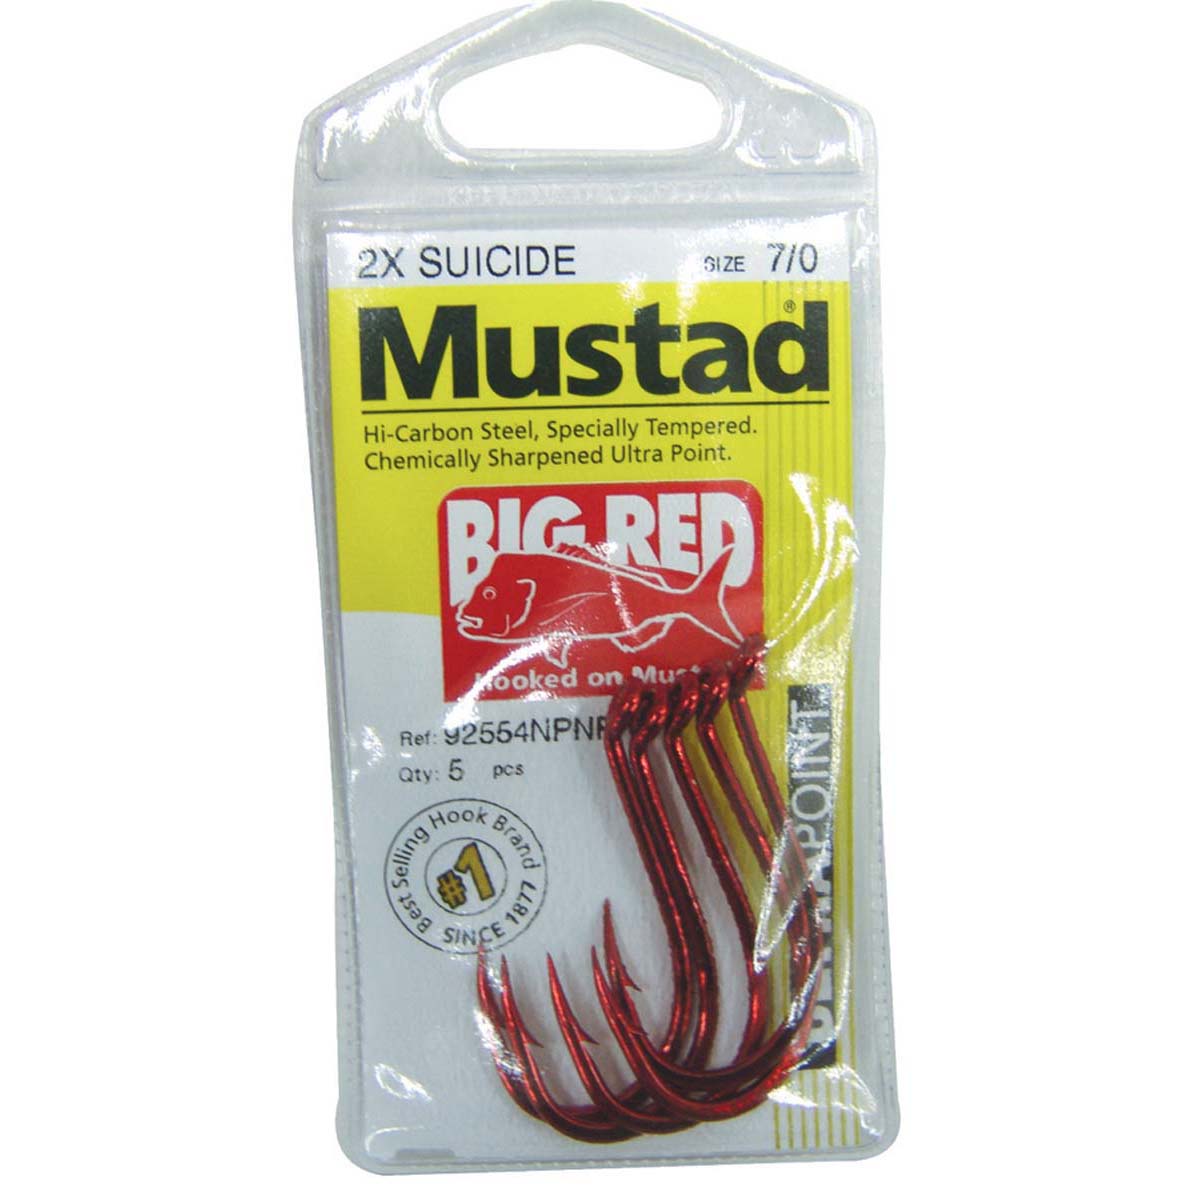 Mustad Big Red Suicide Hooks 1 / 0 8 Pack